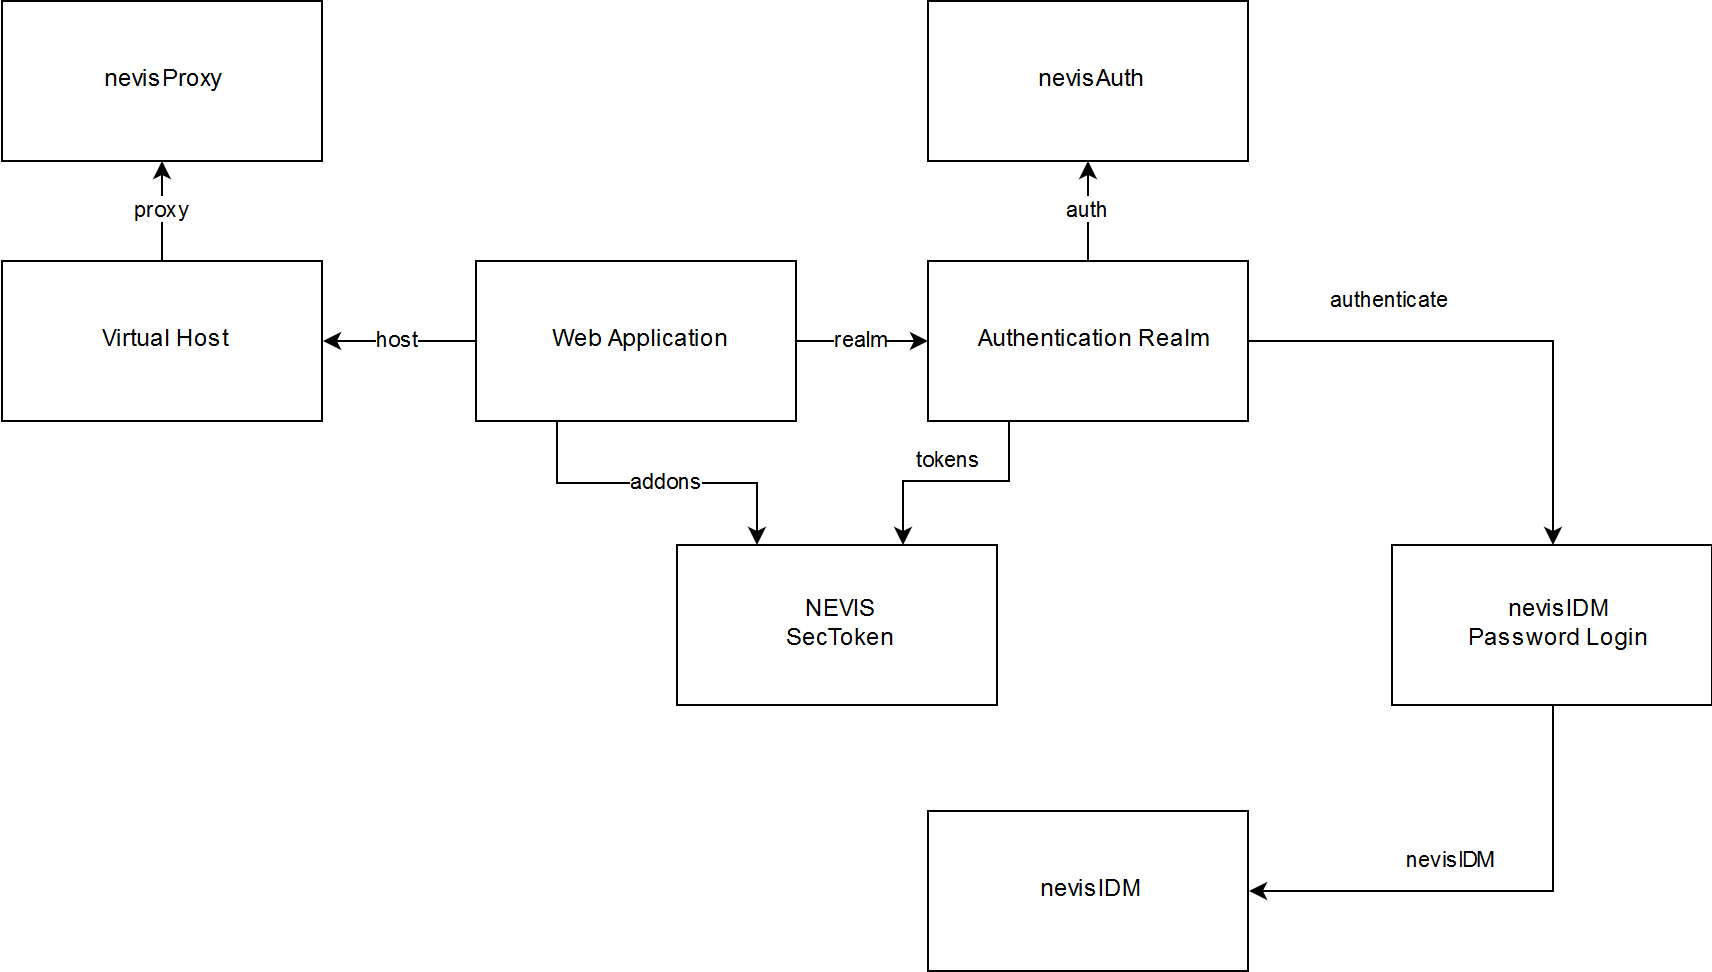 Patterns involved in nevisIDM Password Login